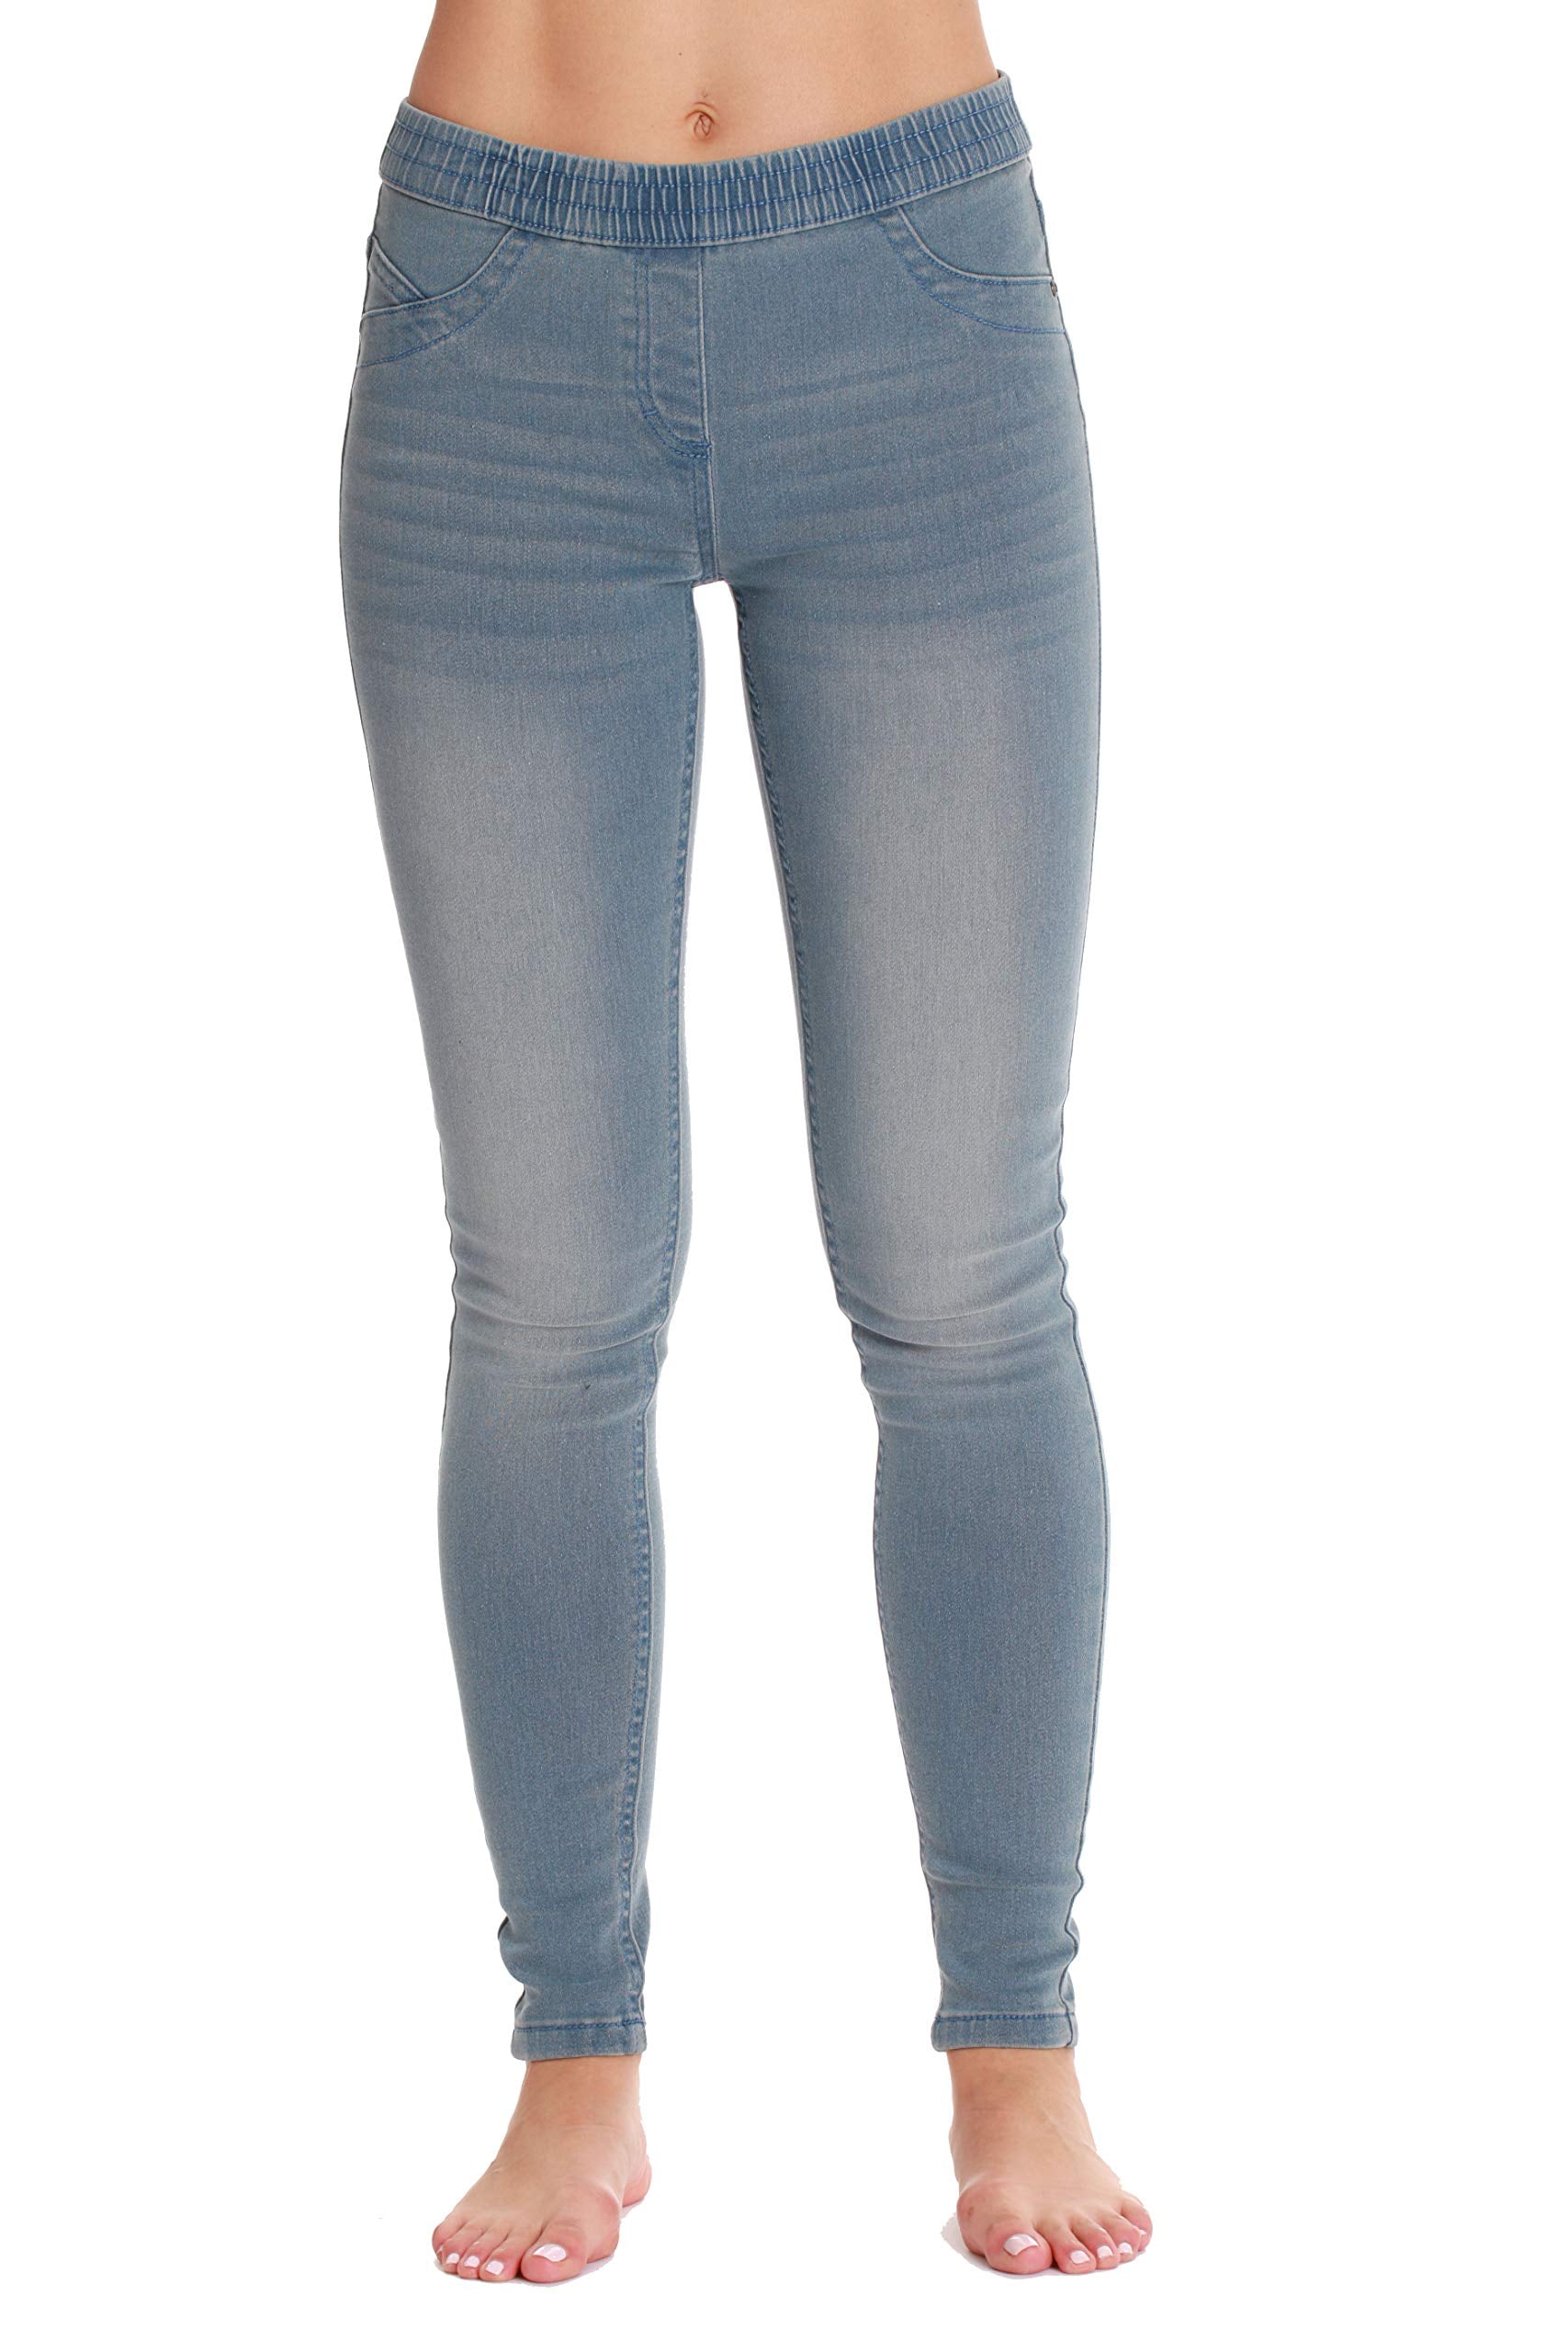 Just Love Women's Denim Jeggings with Pockets - Comfortable Stretch Jeans  Leggings (Light Blue Denim, 2X) 